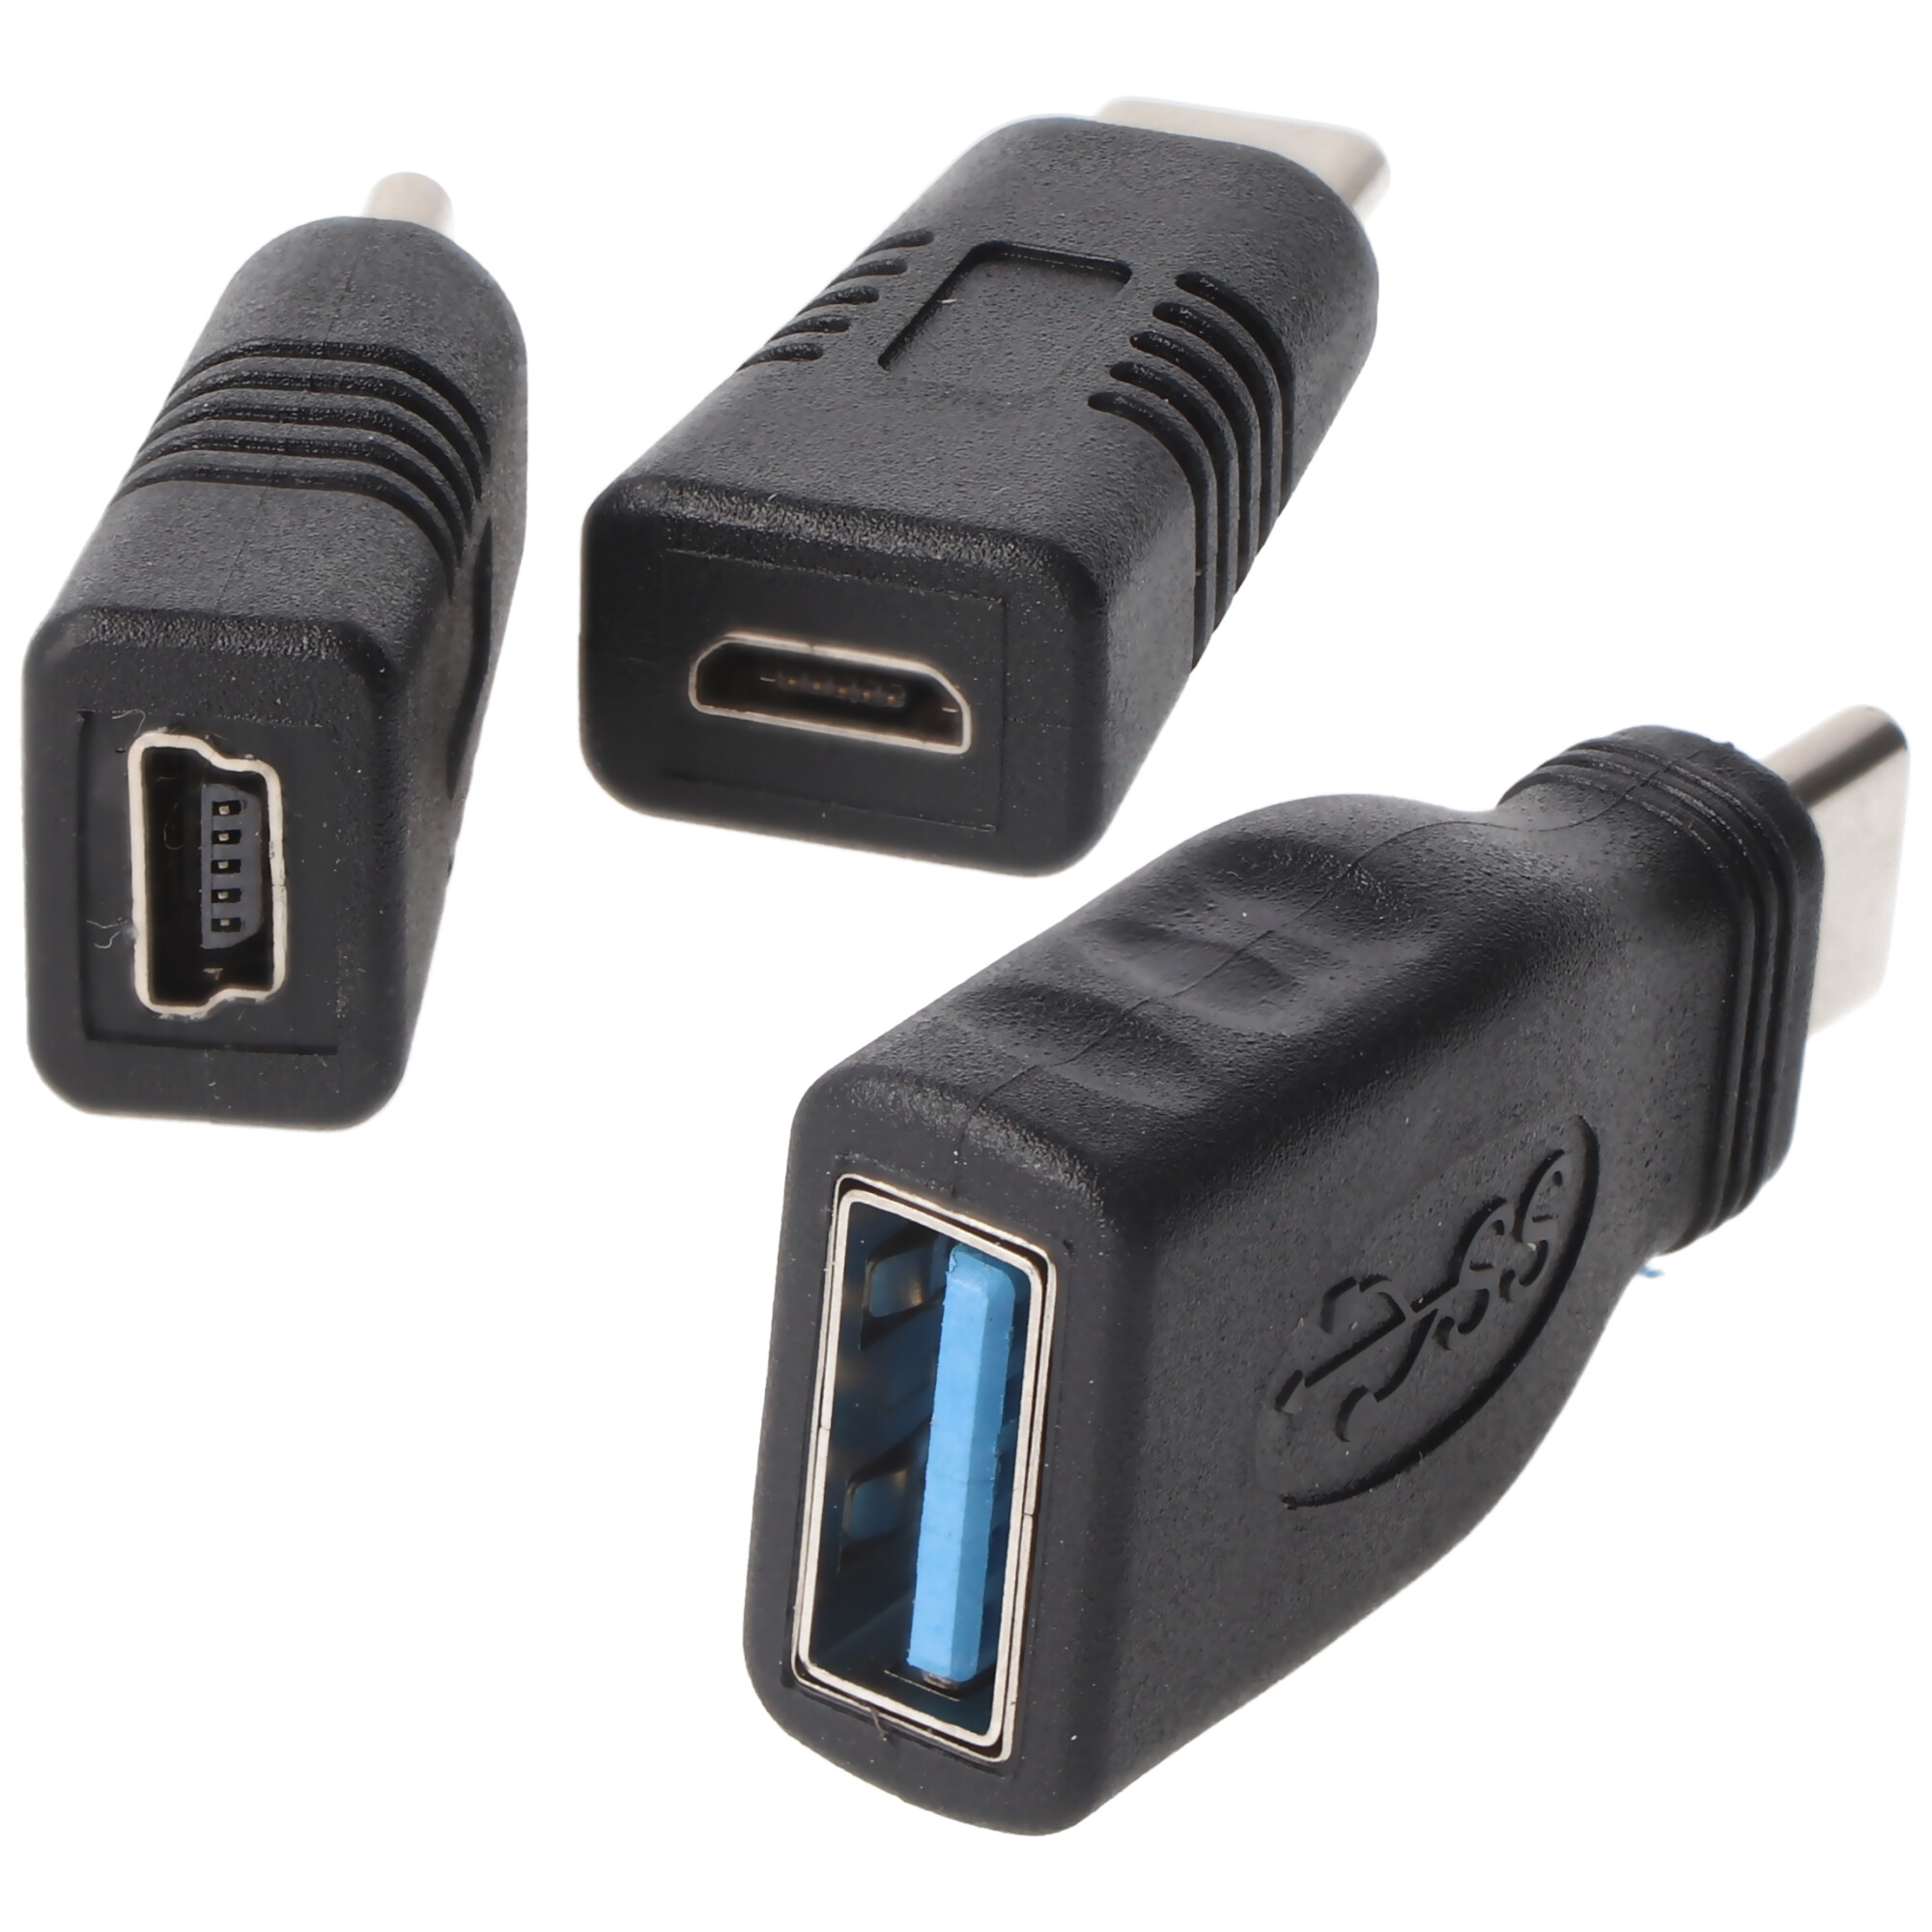 Lot de 4 adaptateurs Micro USB vers USB C - Adaptateur de Charge